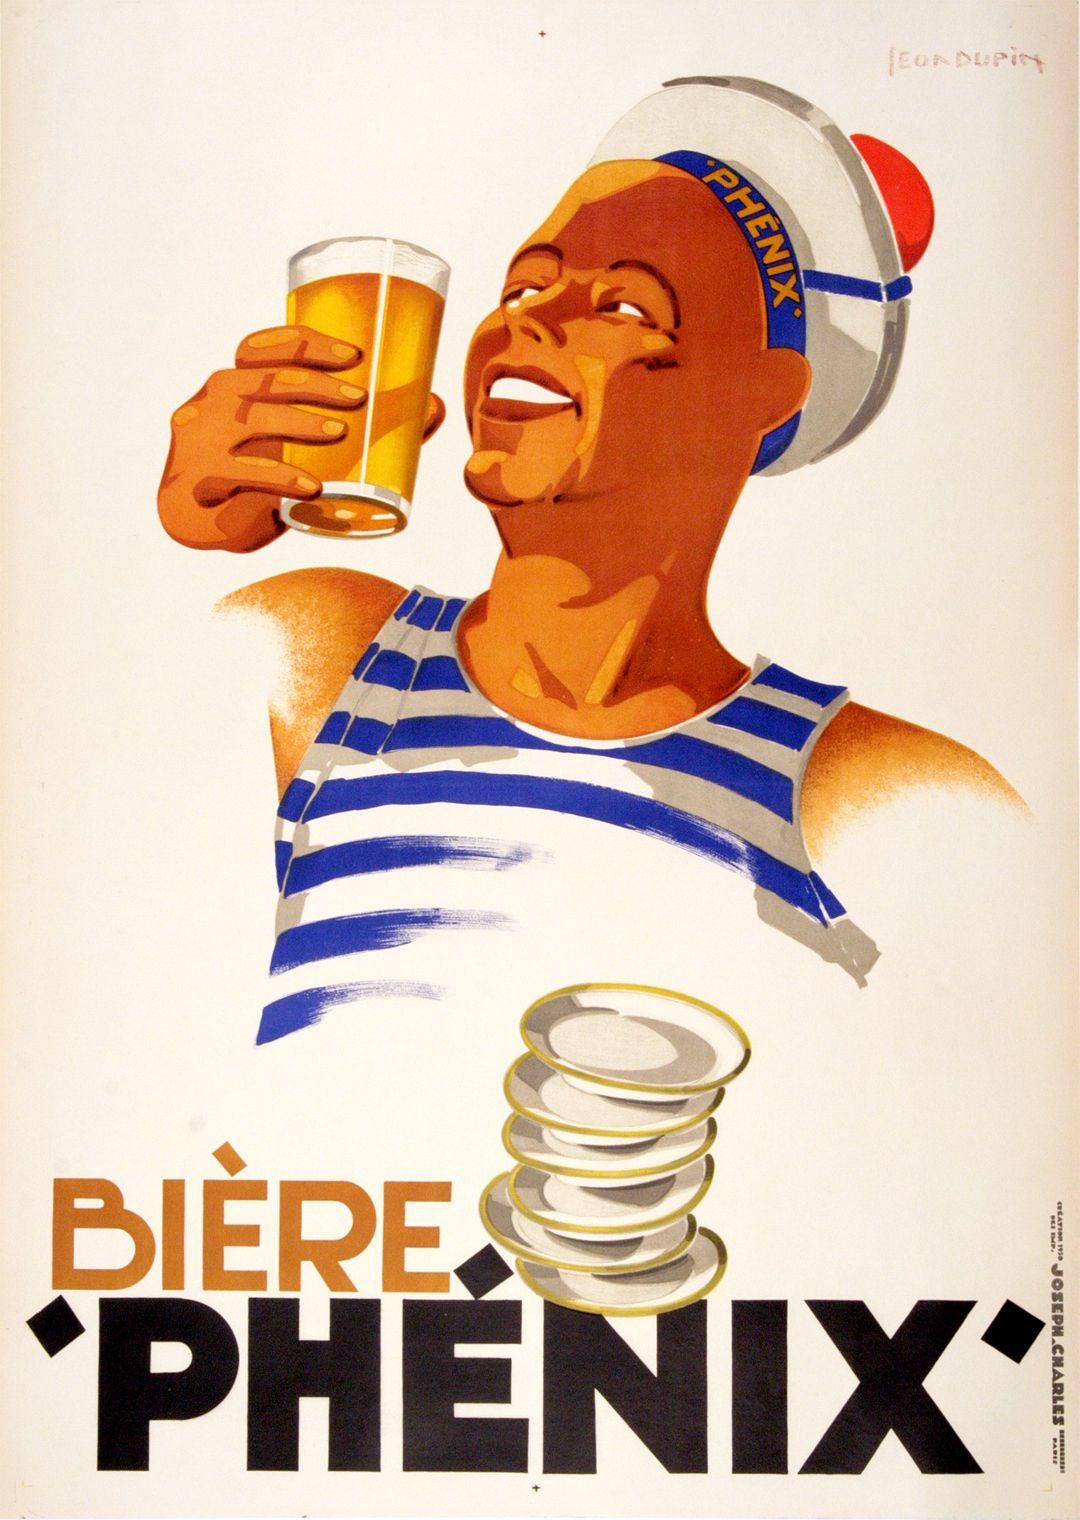 Biere Phenix Original Vintage 1930 Poster by Leon Dupin Sailor Drinking Beer